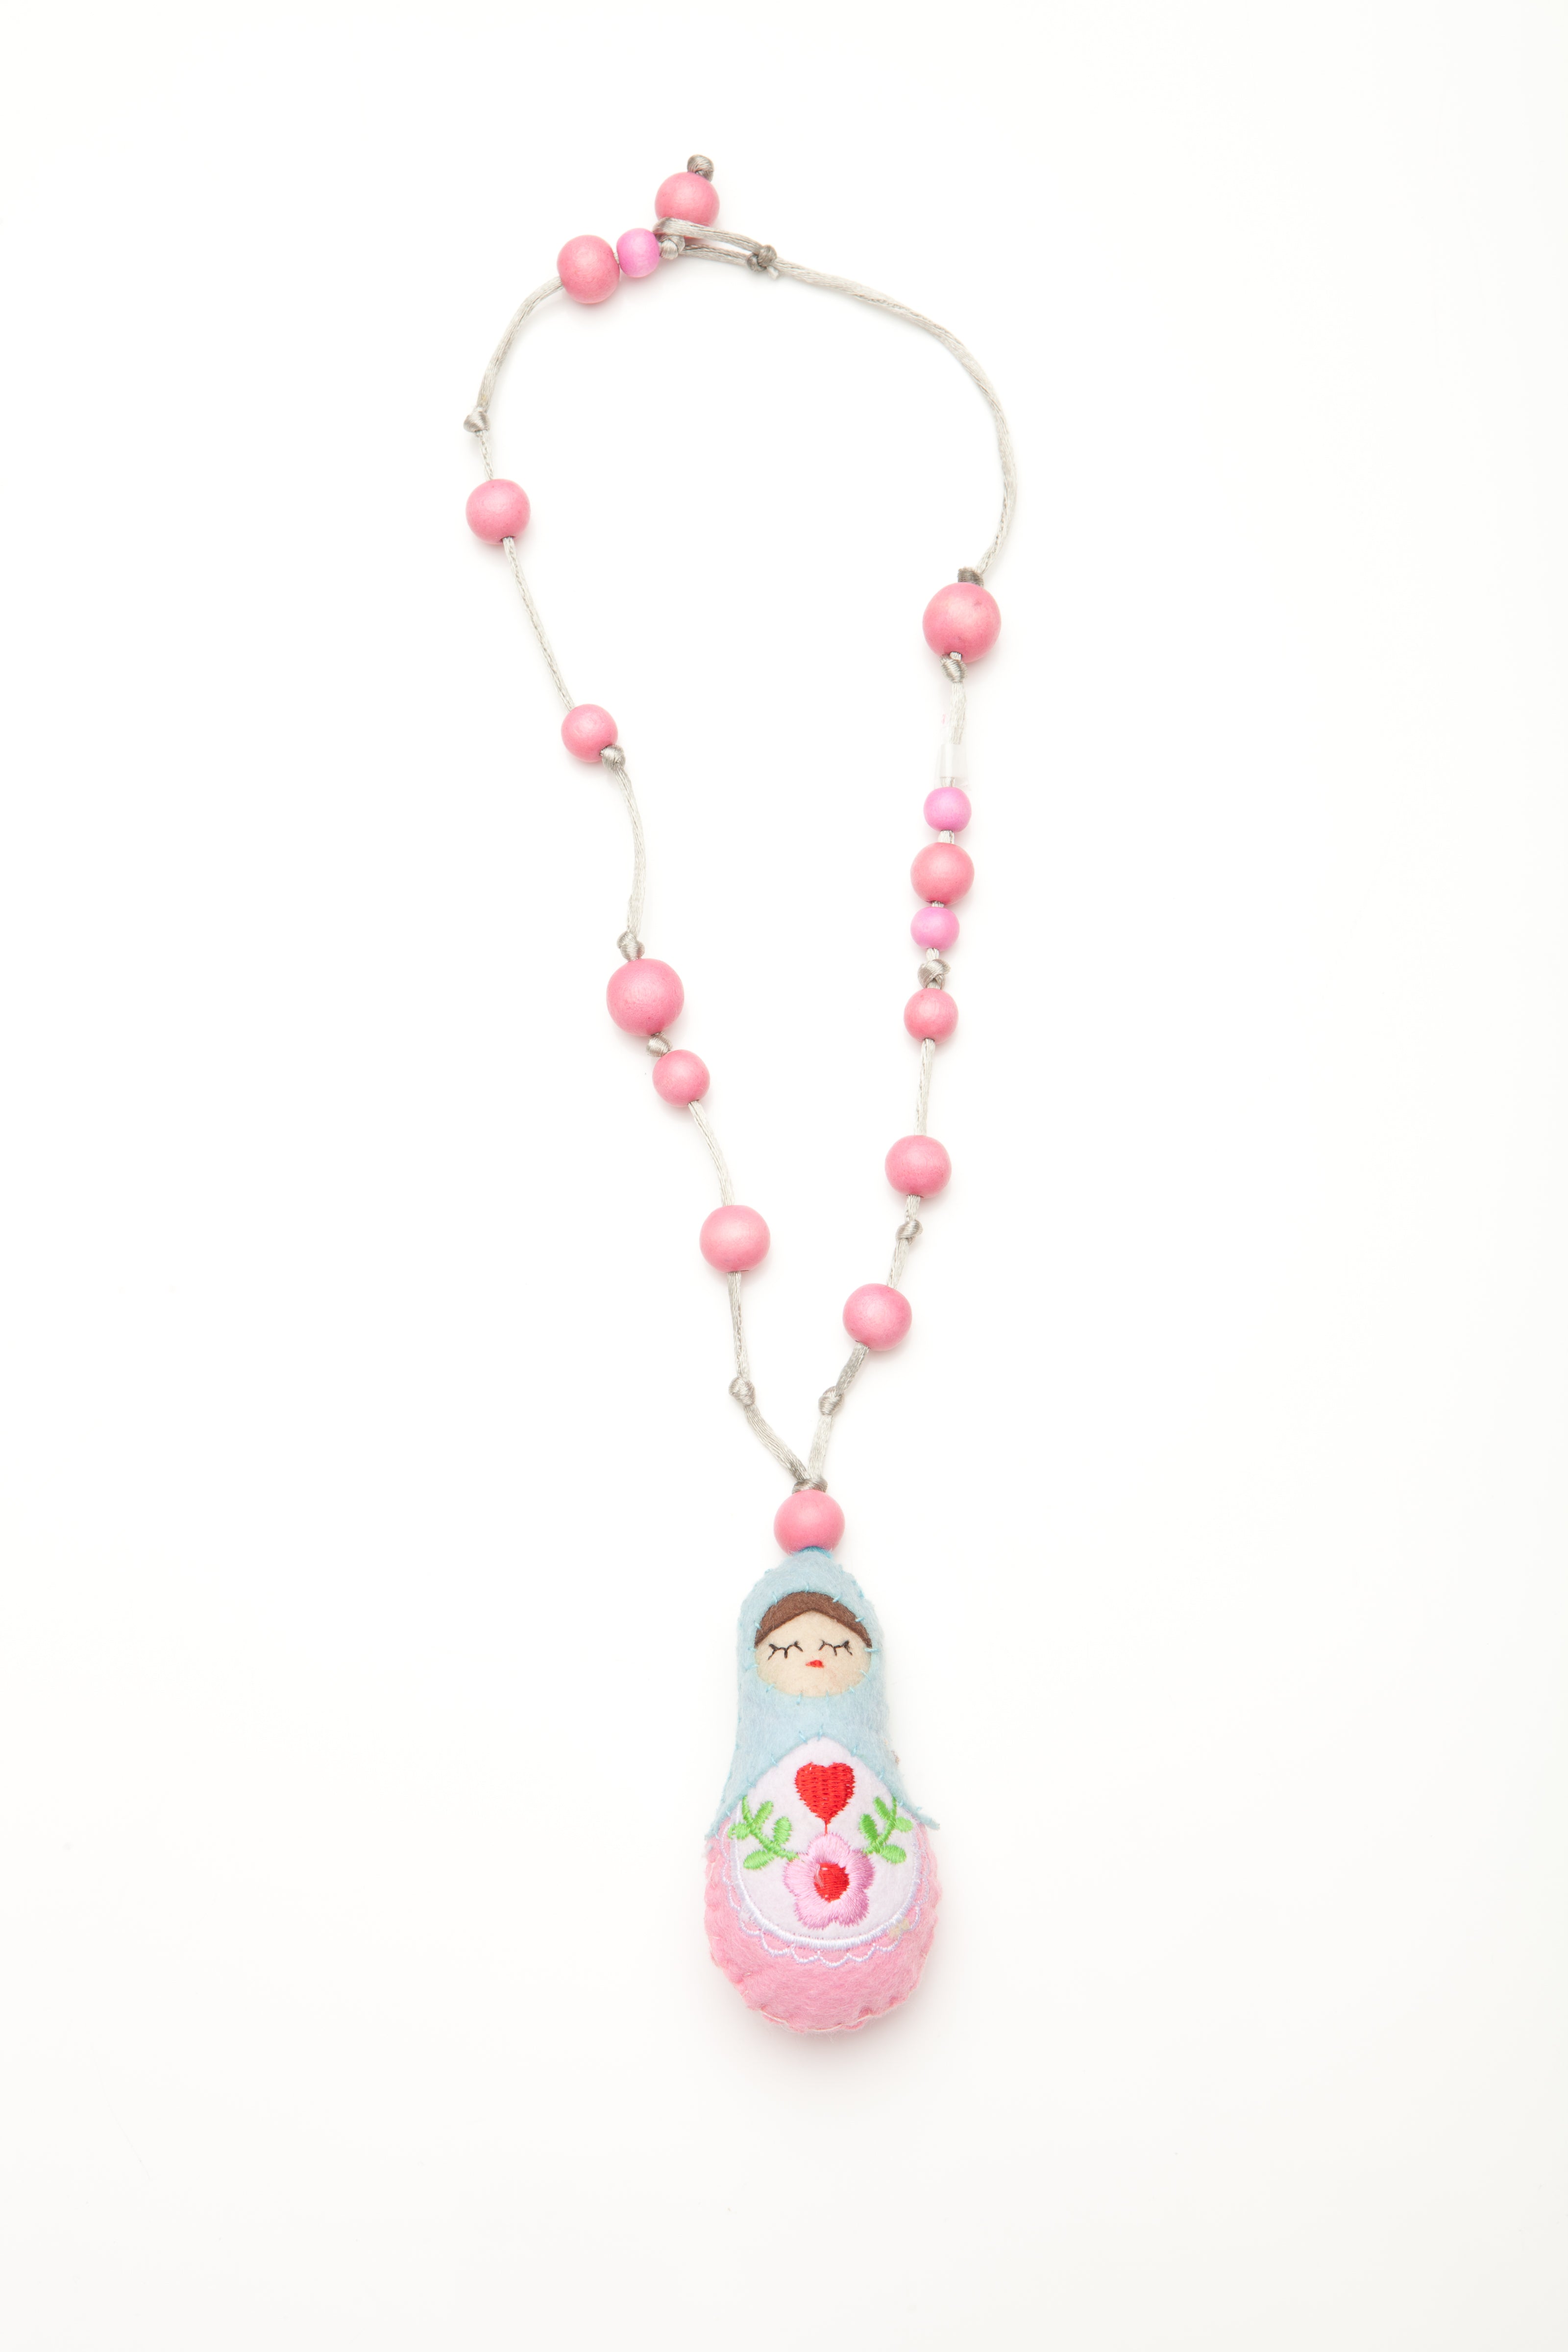 Babushka Doll necklace